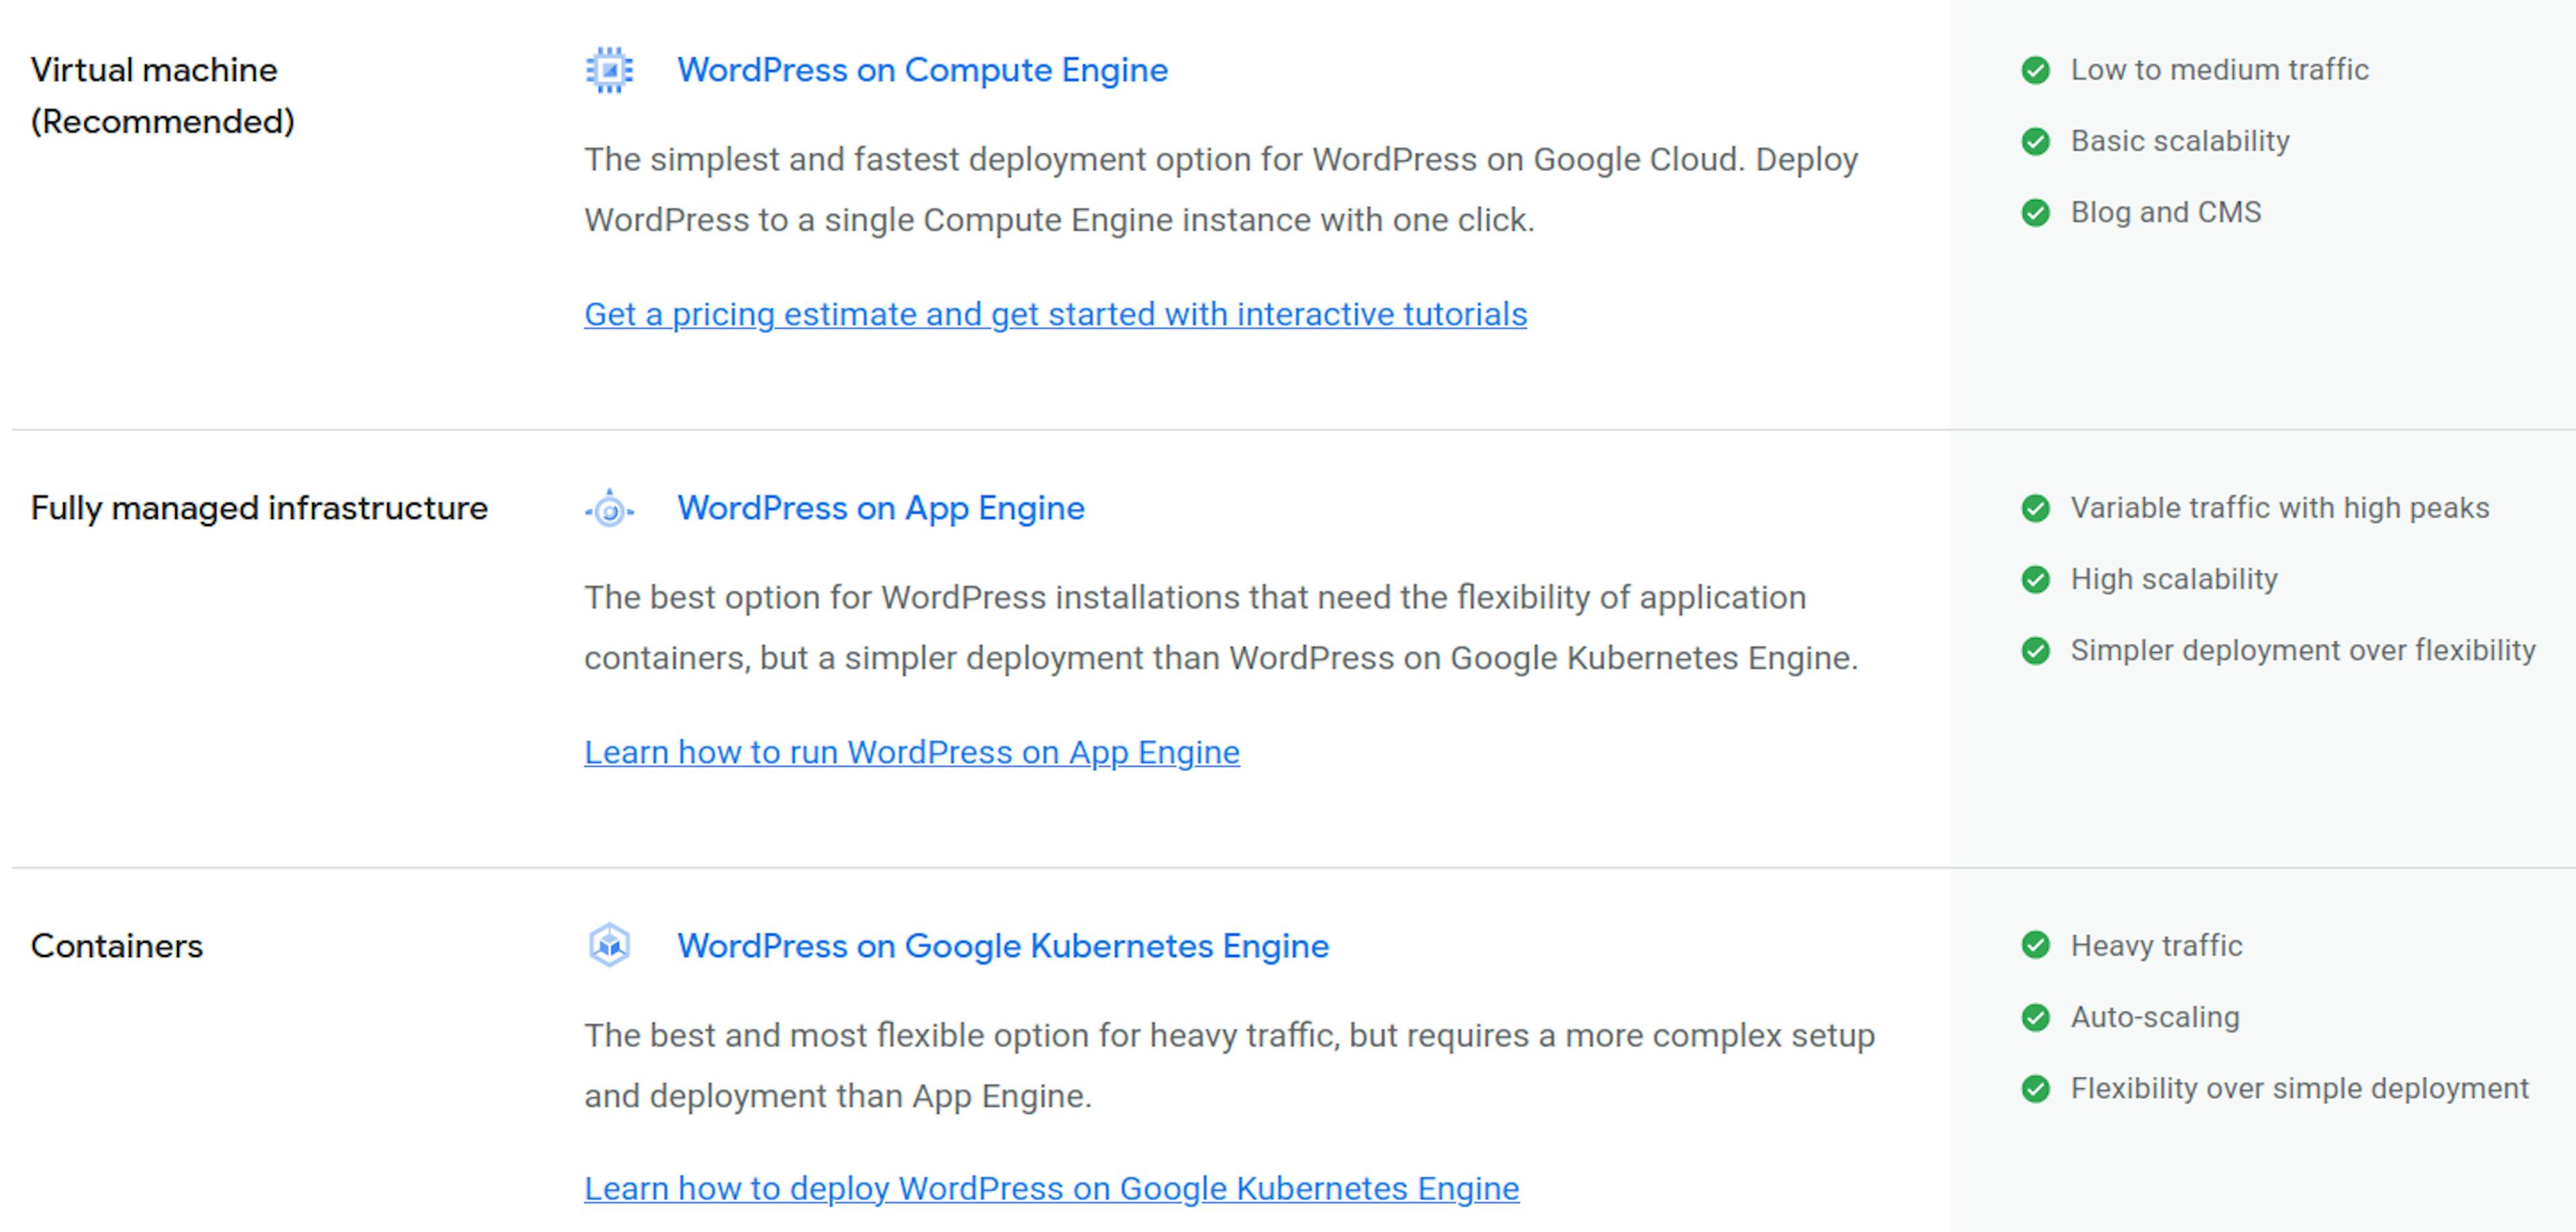 Google Cloud Platform's solution for WordPress